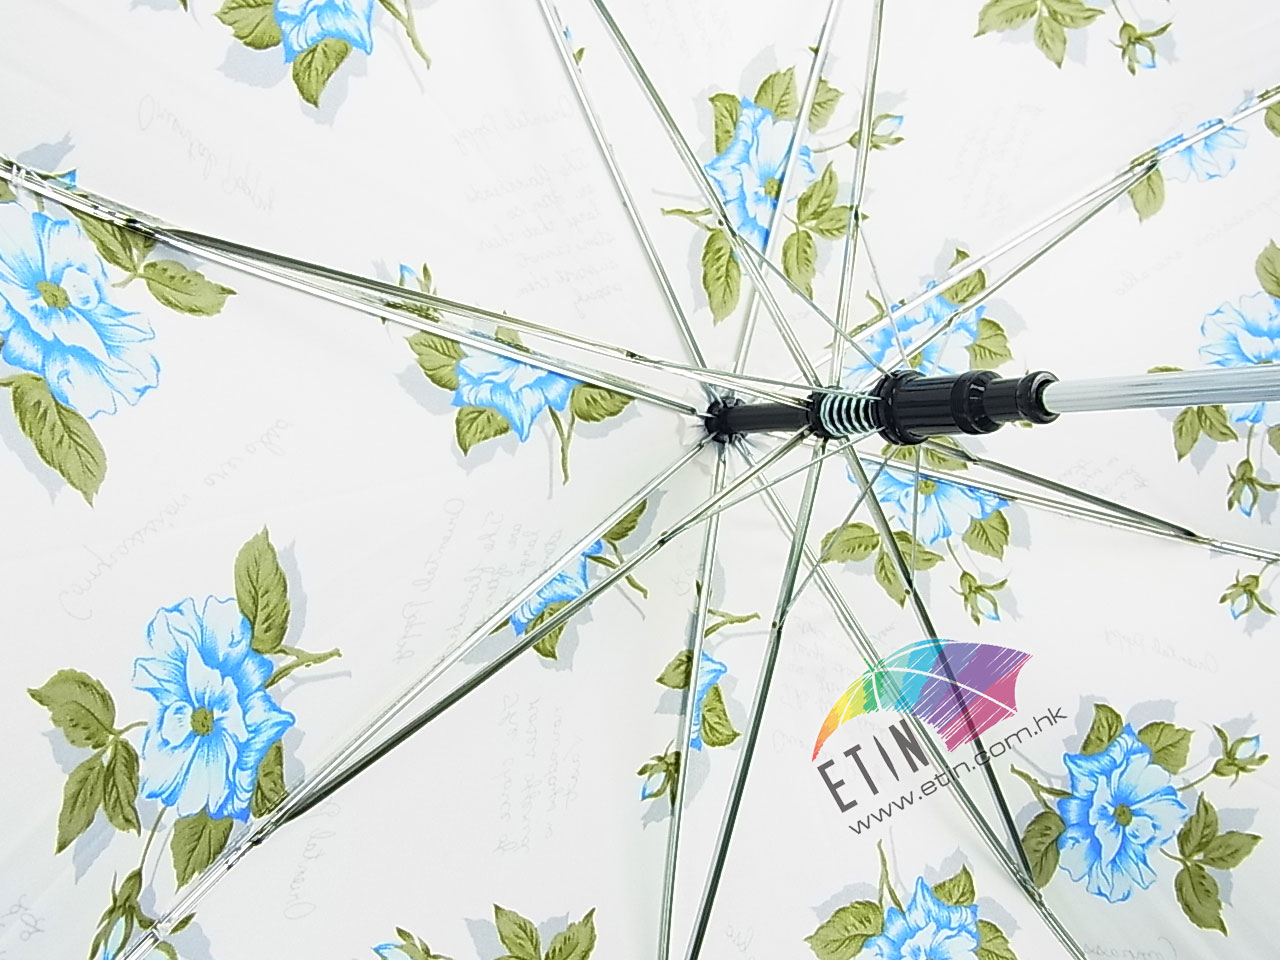 Etin Satin flower umbrella A103